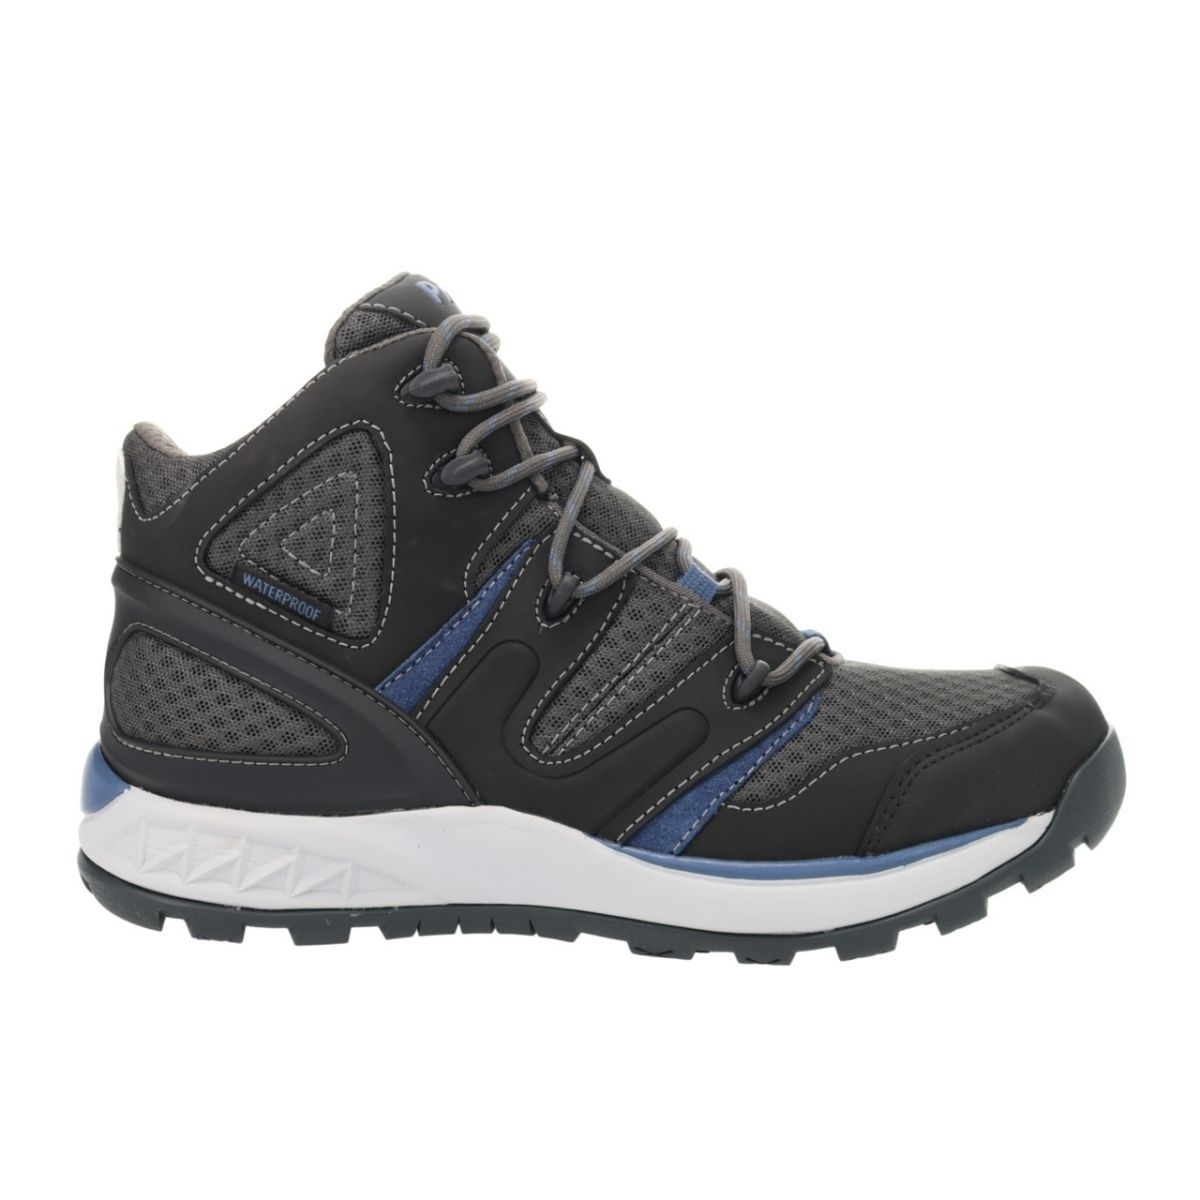 Propet Men's Veymont Waterproof Hiking Boot Grey/Blue - MOA022SGRB GREY/BLUE - GREY/BLUE, 15 X-Wide